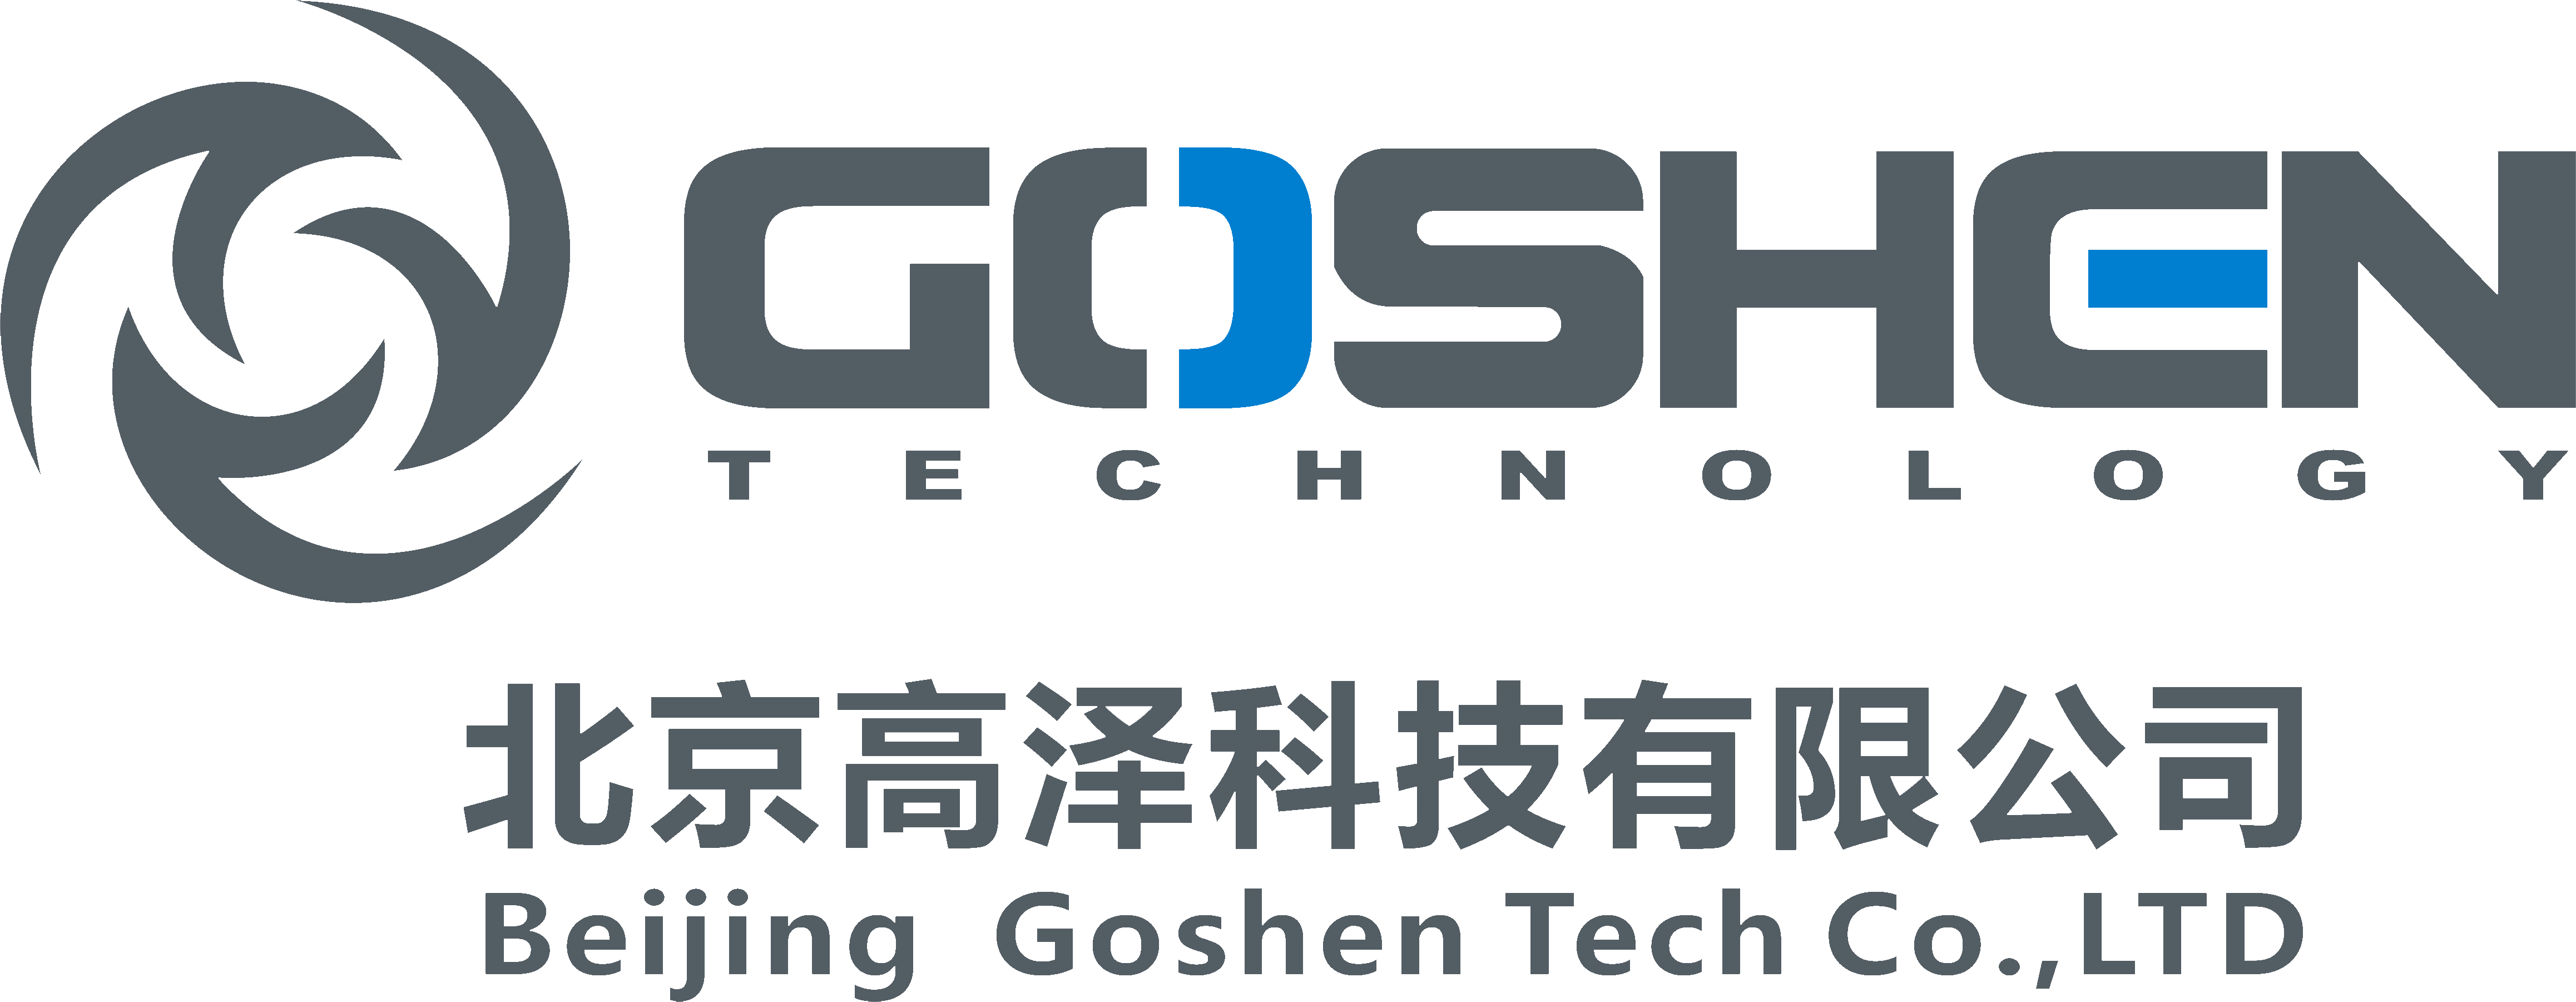 www.gostech.cn